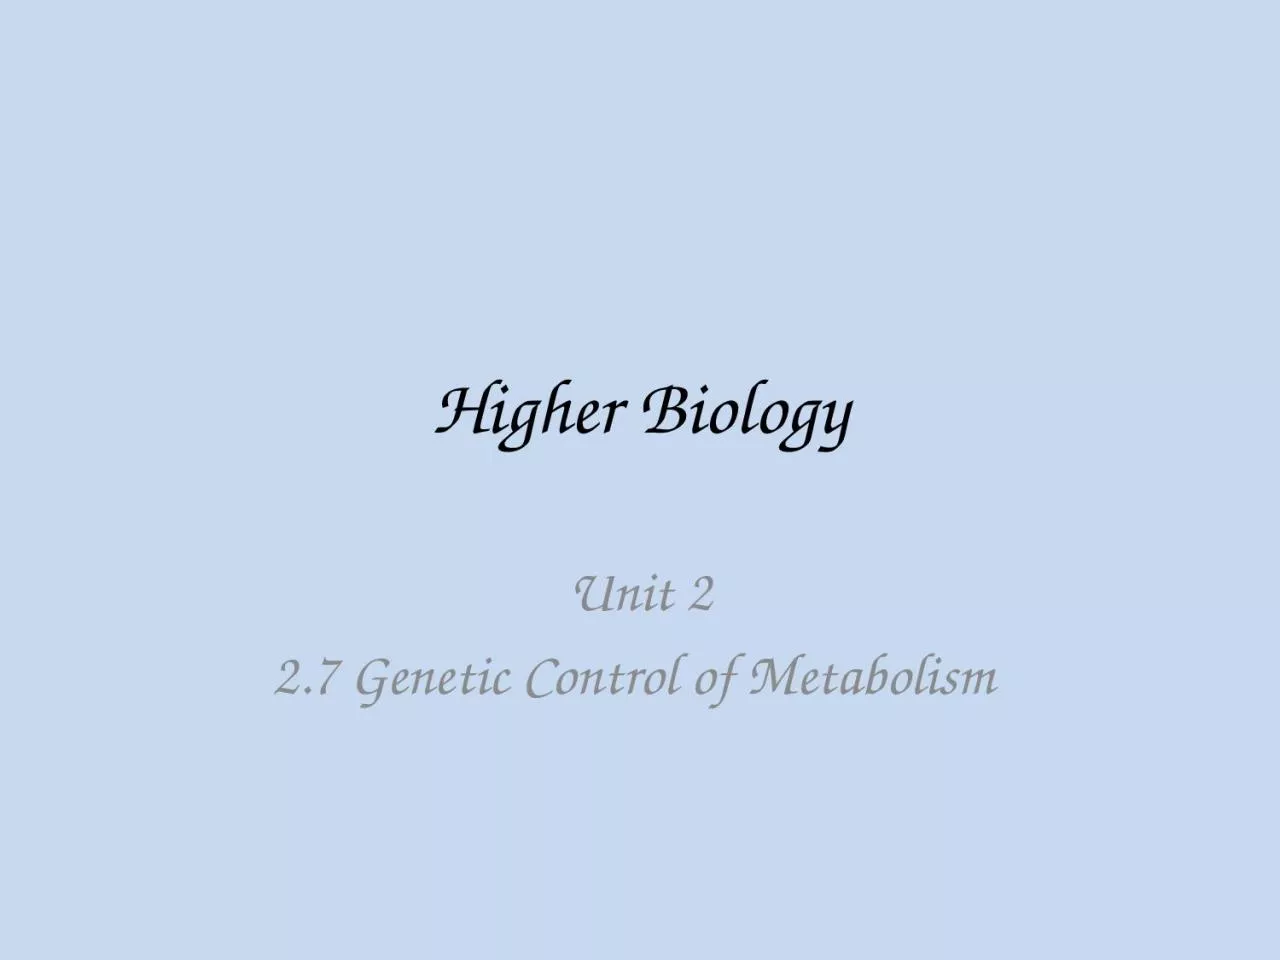 Higher Biology Unit 2 2.7 Genetic Control of Metabolism